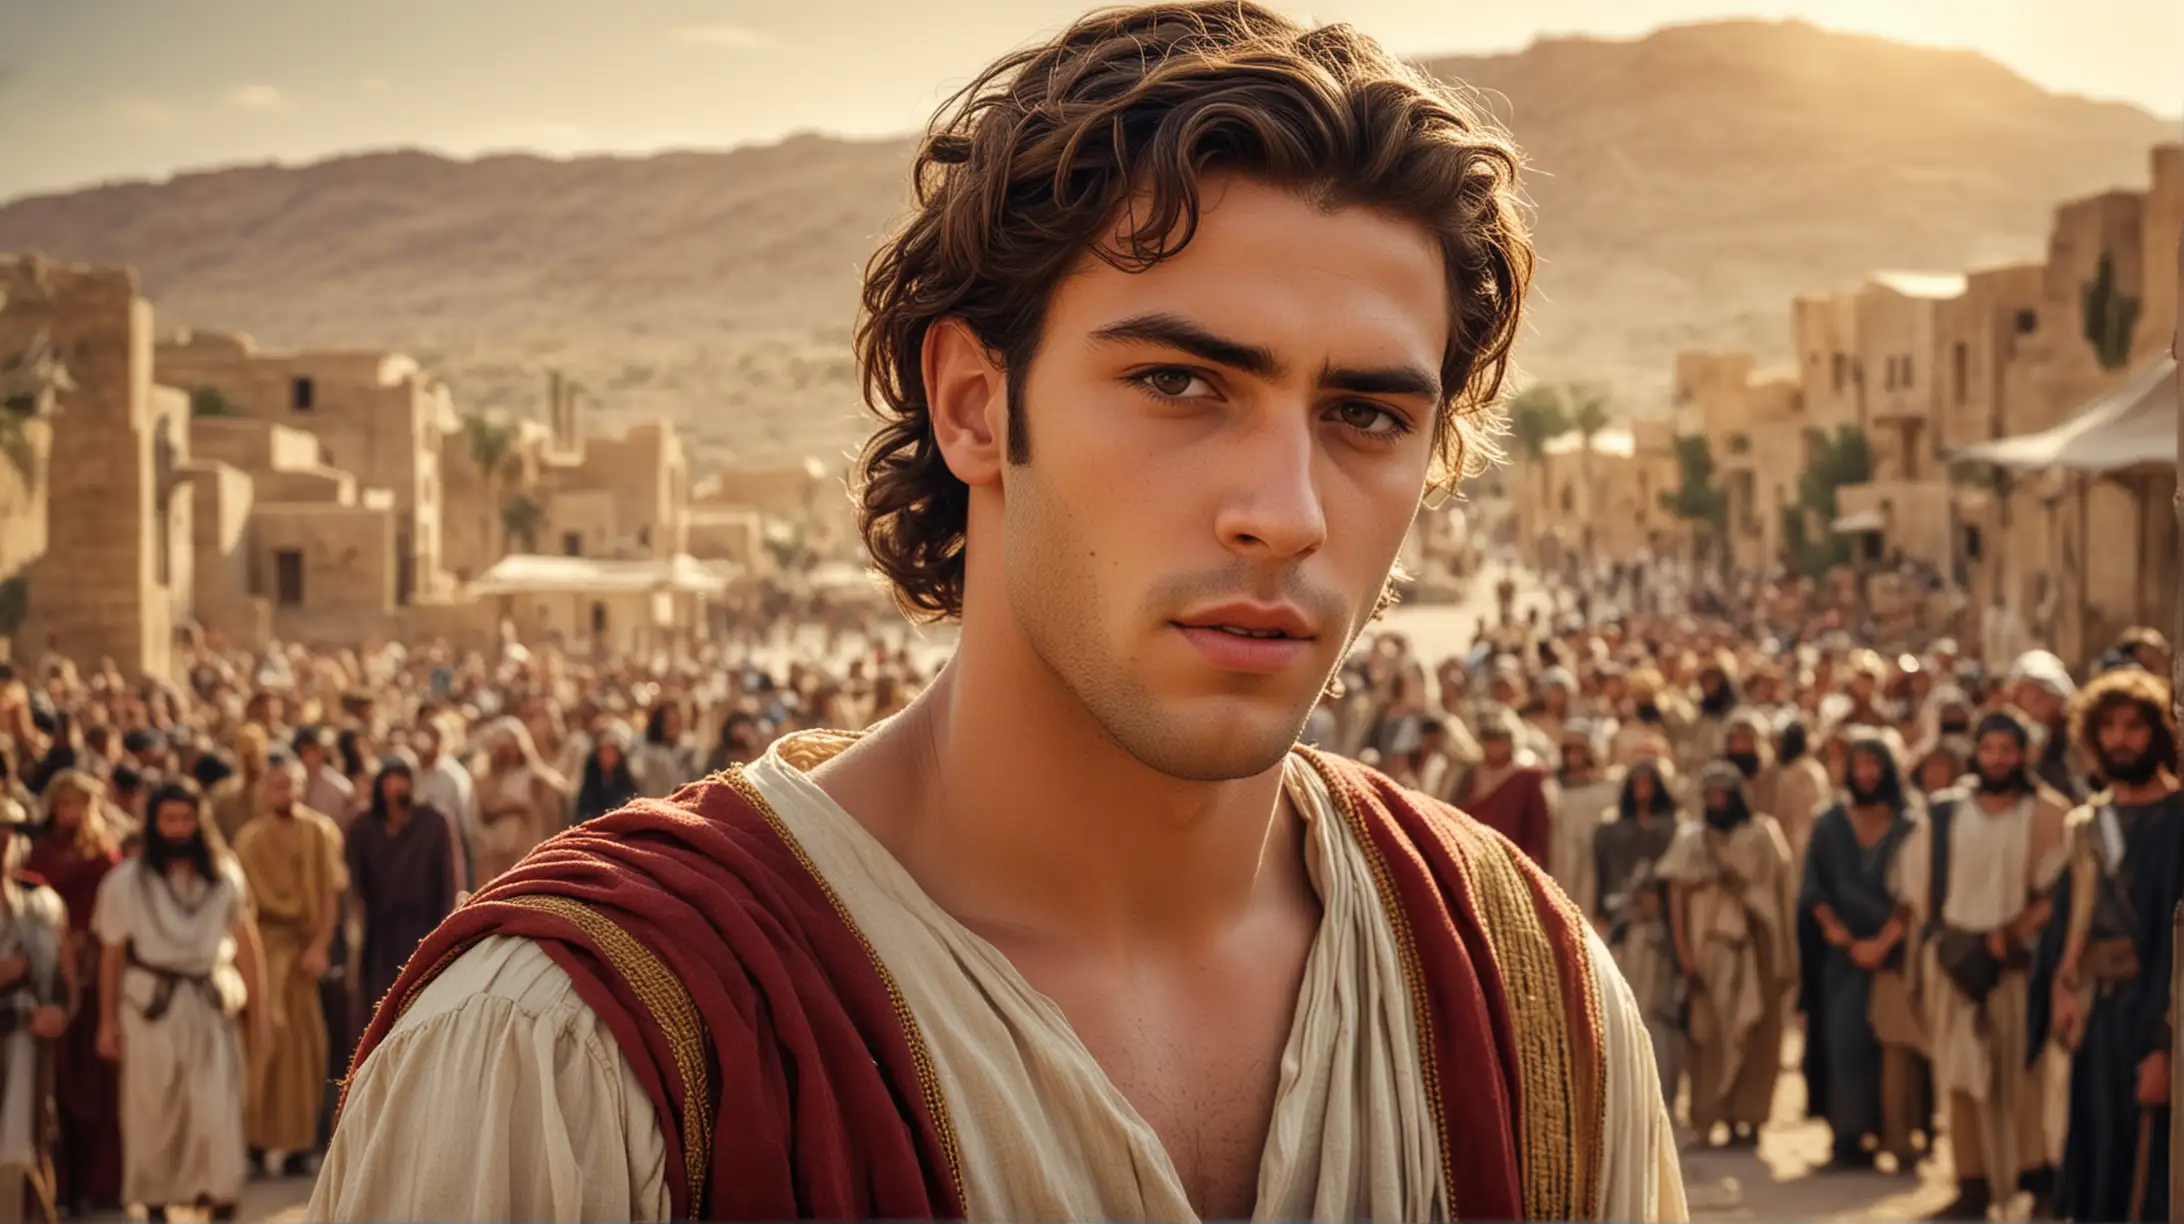 King Solomon and His Men in the Desert City during King Davids Biblical Era